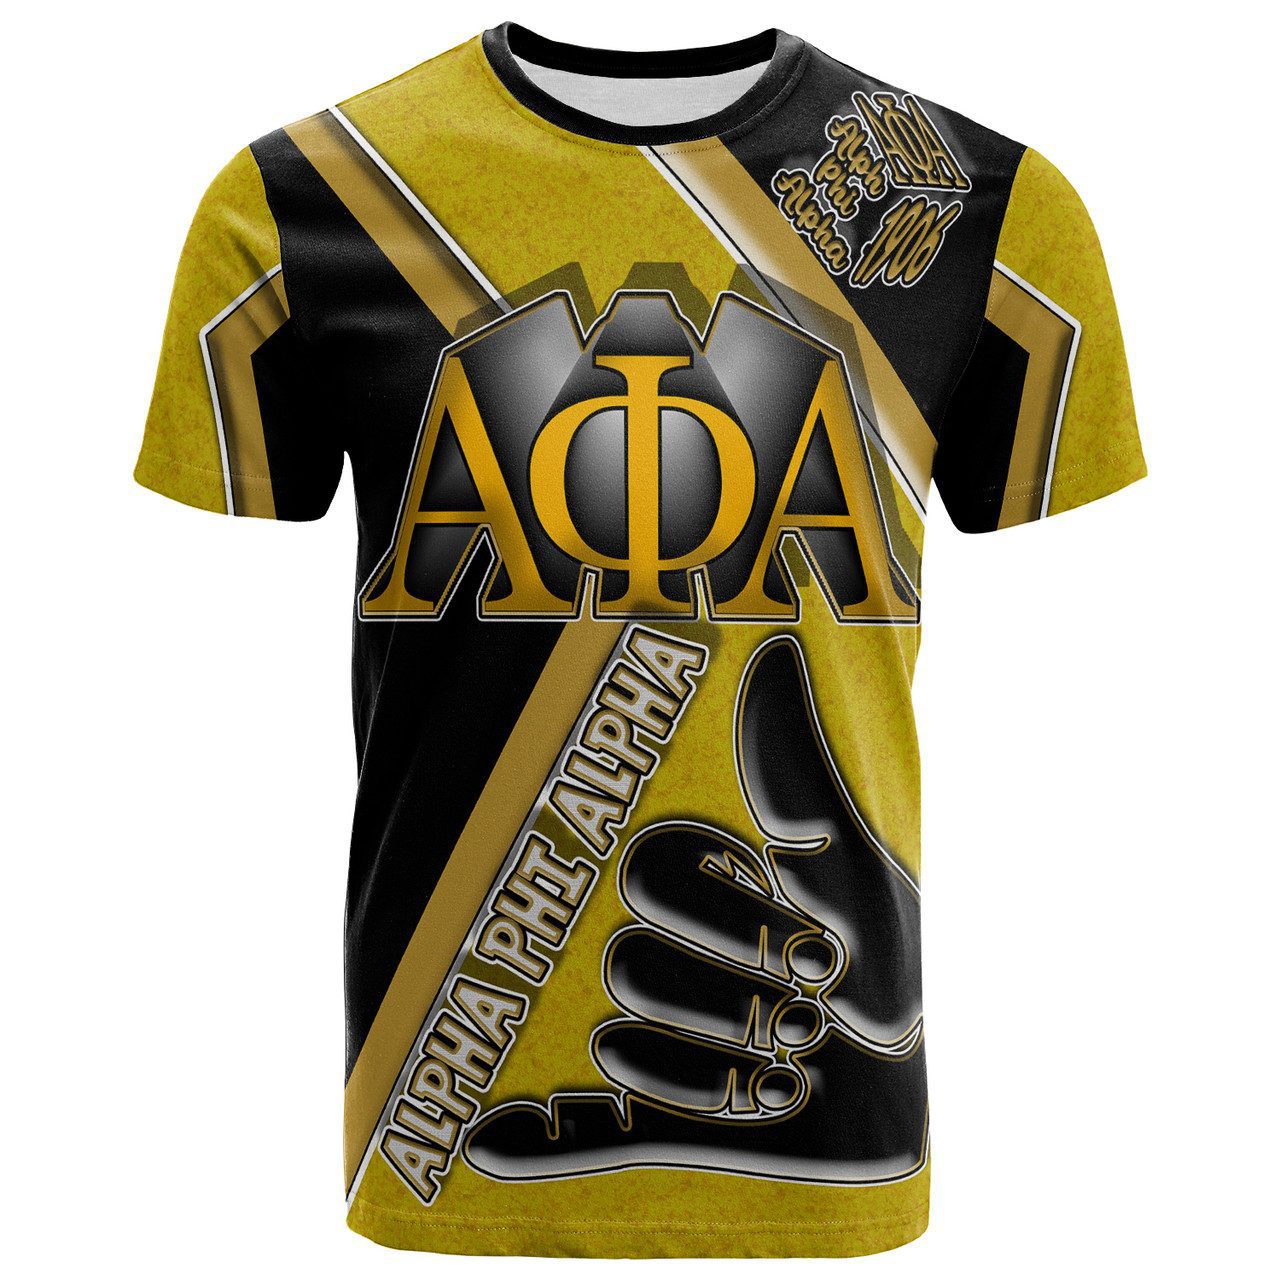 Alpha Phi Alpha T- Shirt – Alpha Phi Alpha Fraternity Hand T- Shirt